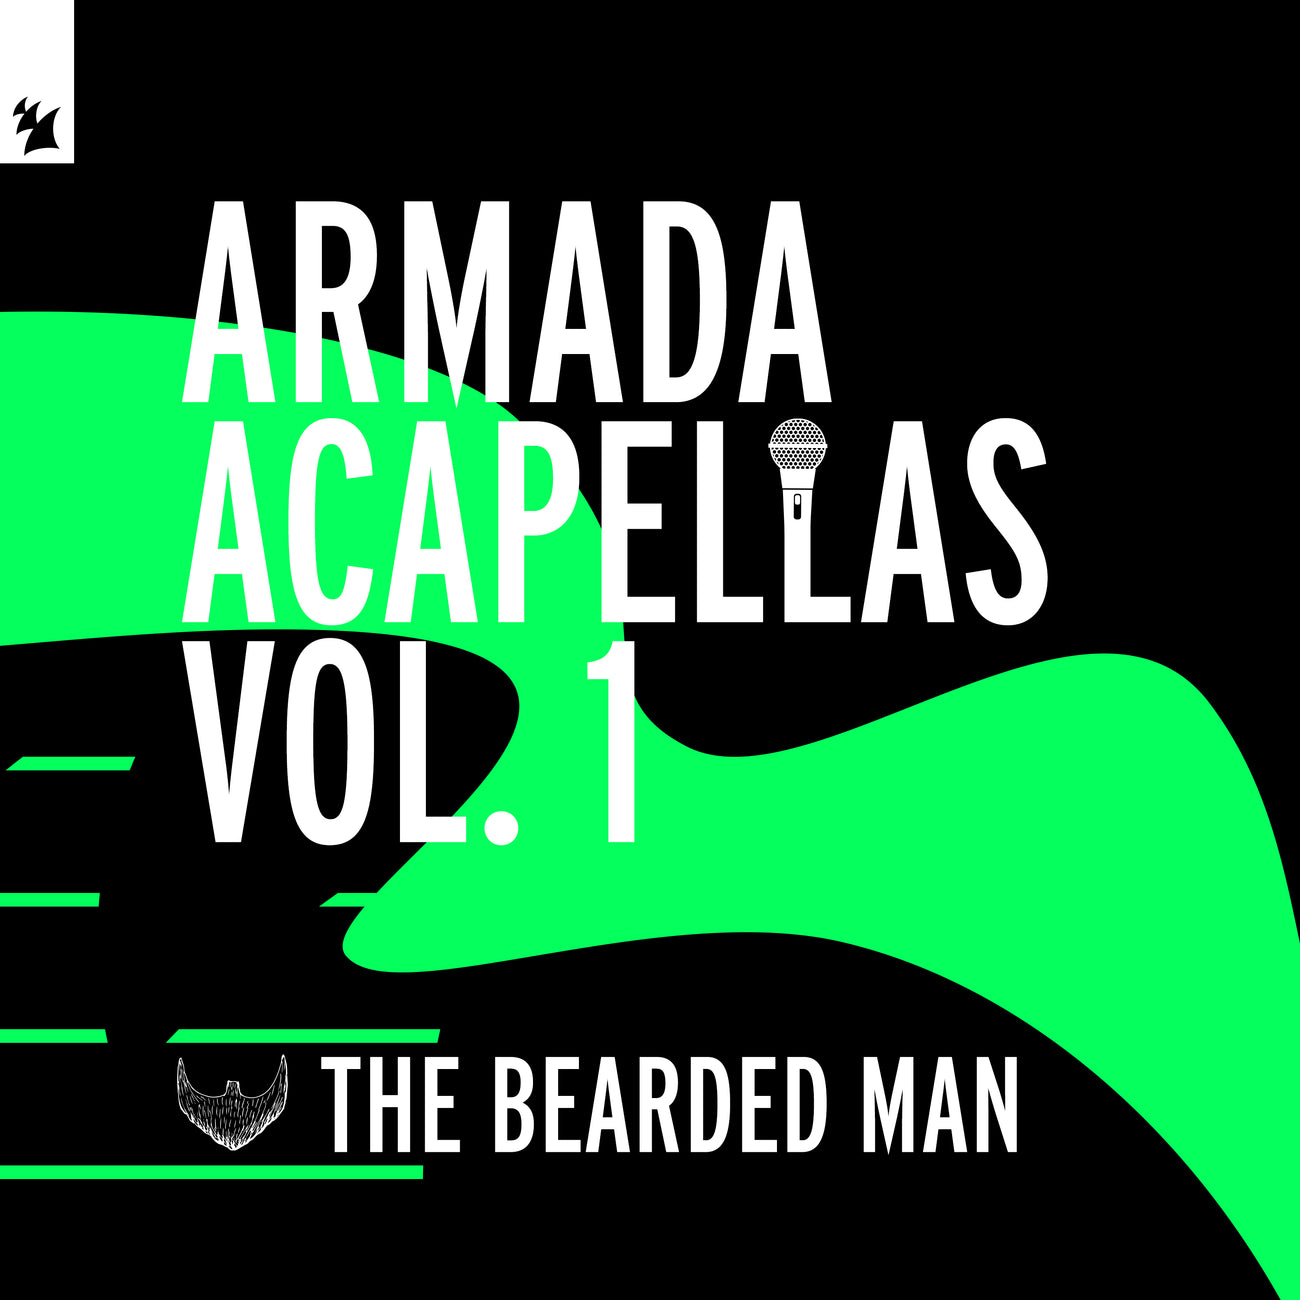 Armada Acapellas Vol. 1 - The Bearded Man